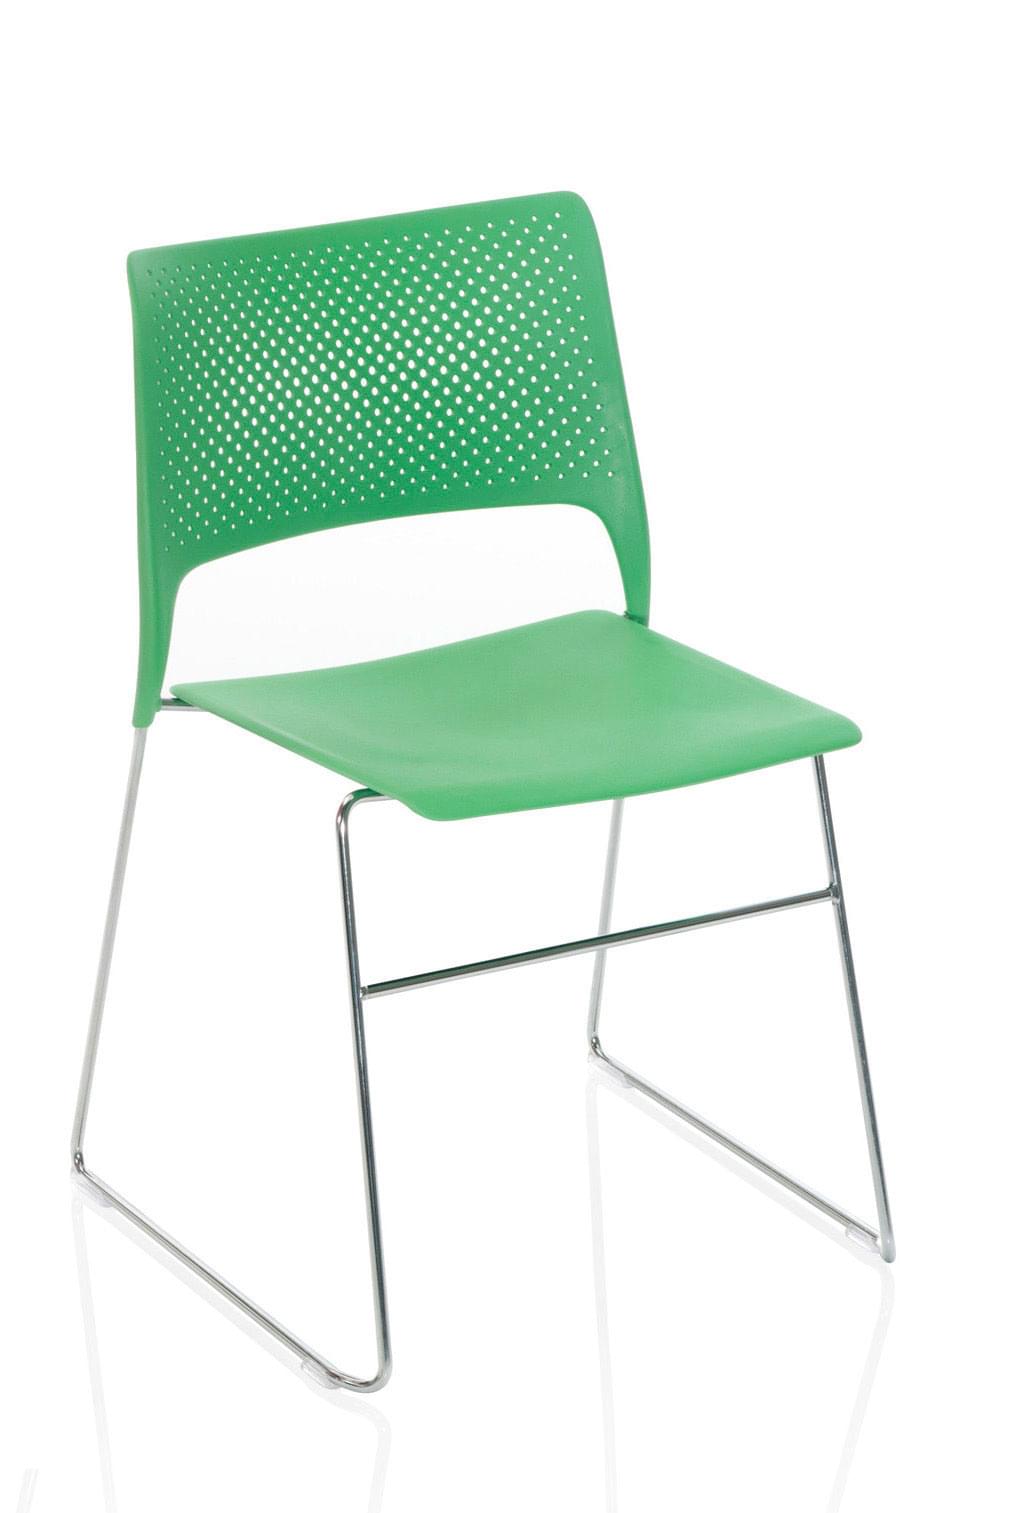 Orangebox Cors Chair